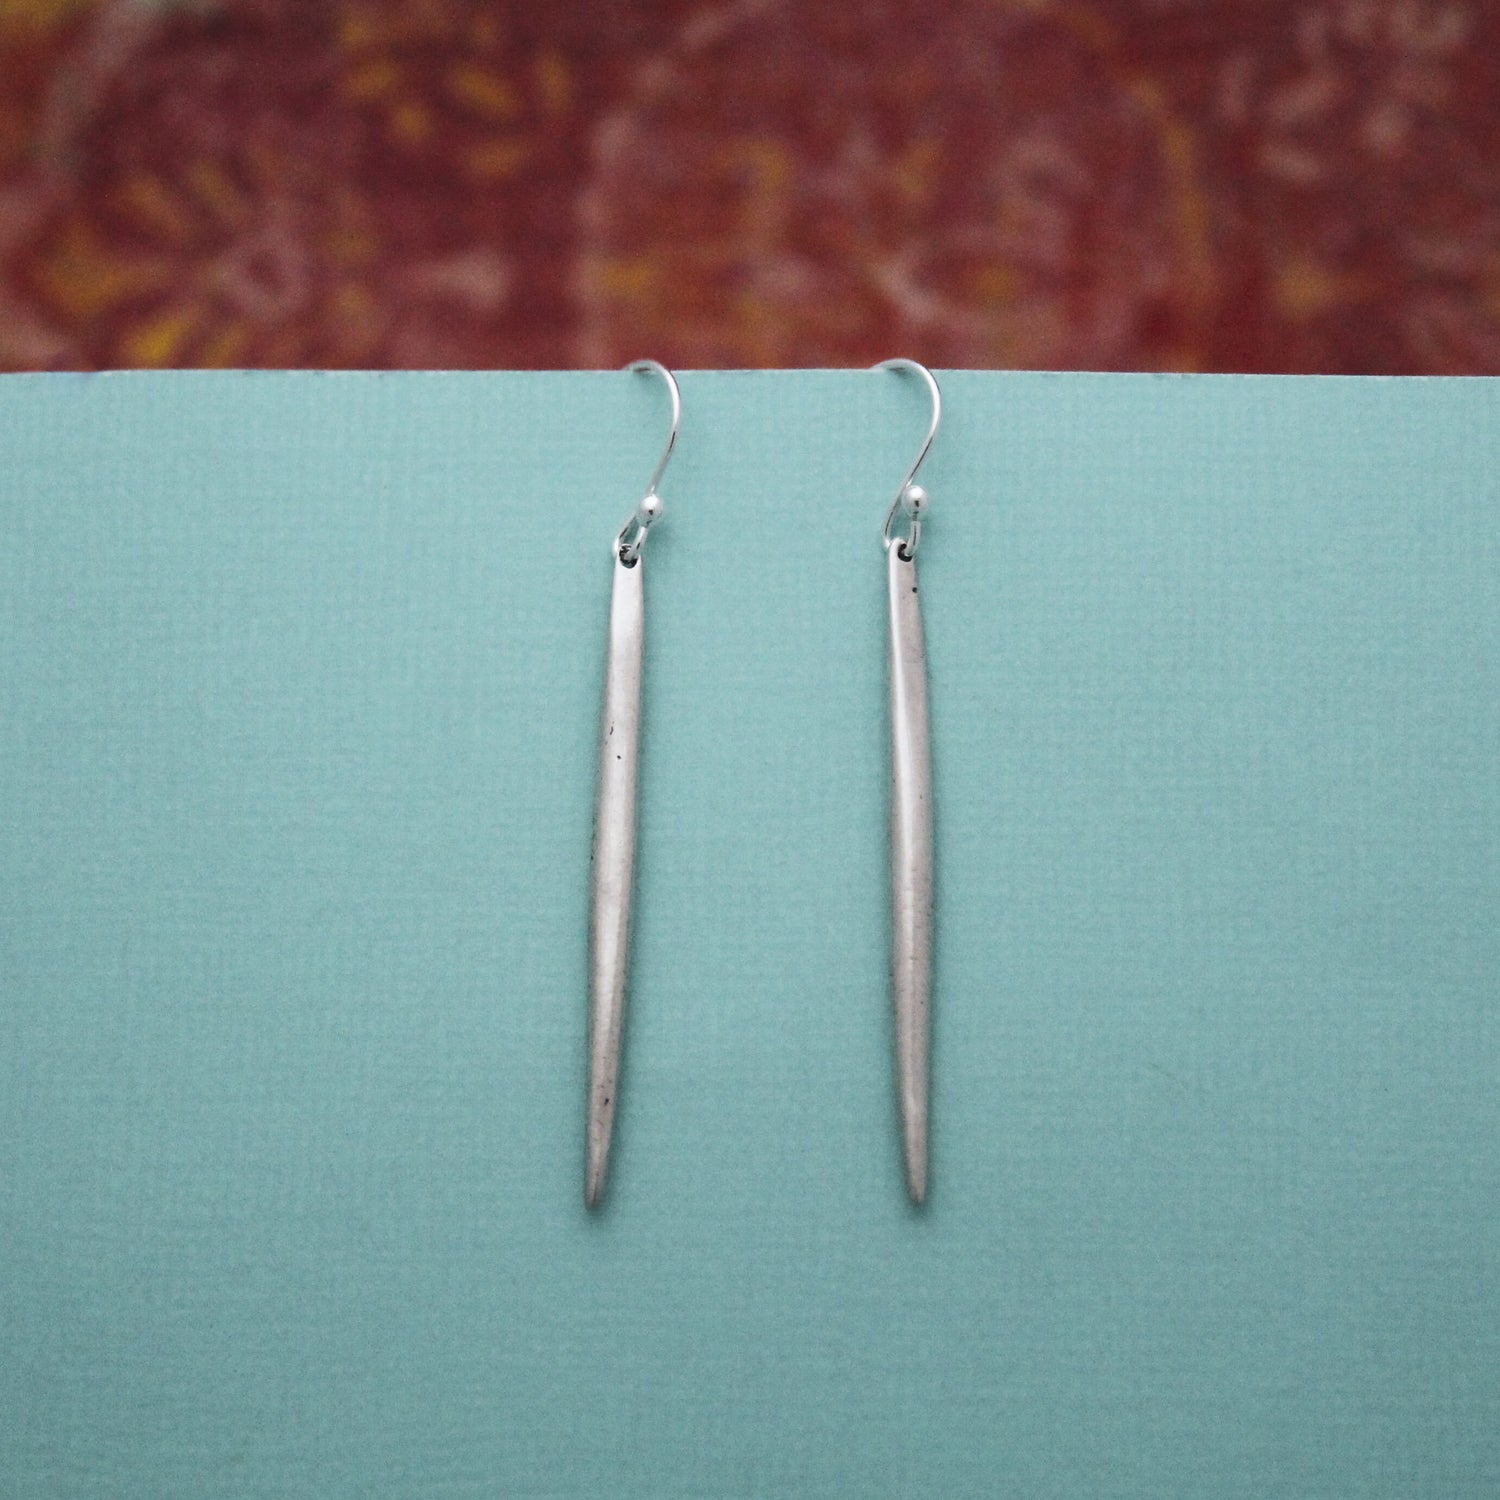 Long Minimalist Stick Earrings, Sterling Silver Earrings, Statement Silver Earrings, Silver Wire Earrings, Casual Style Earrings, Layered